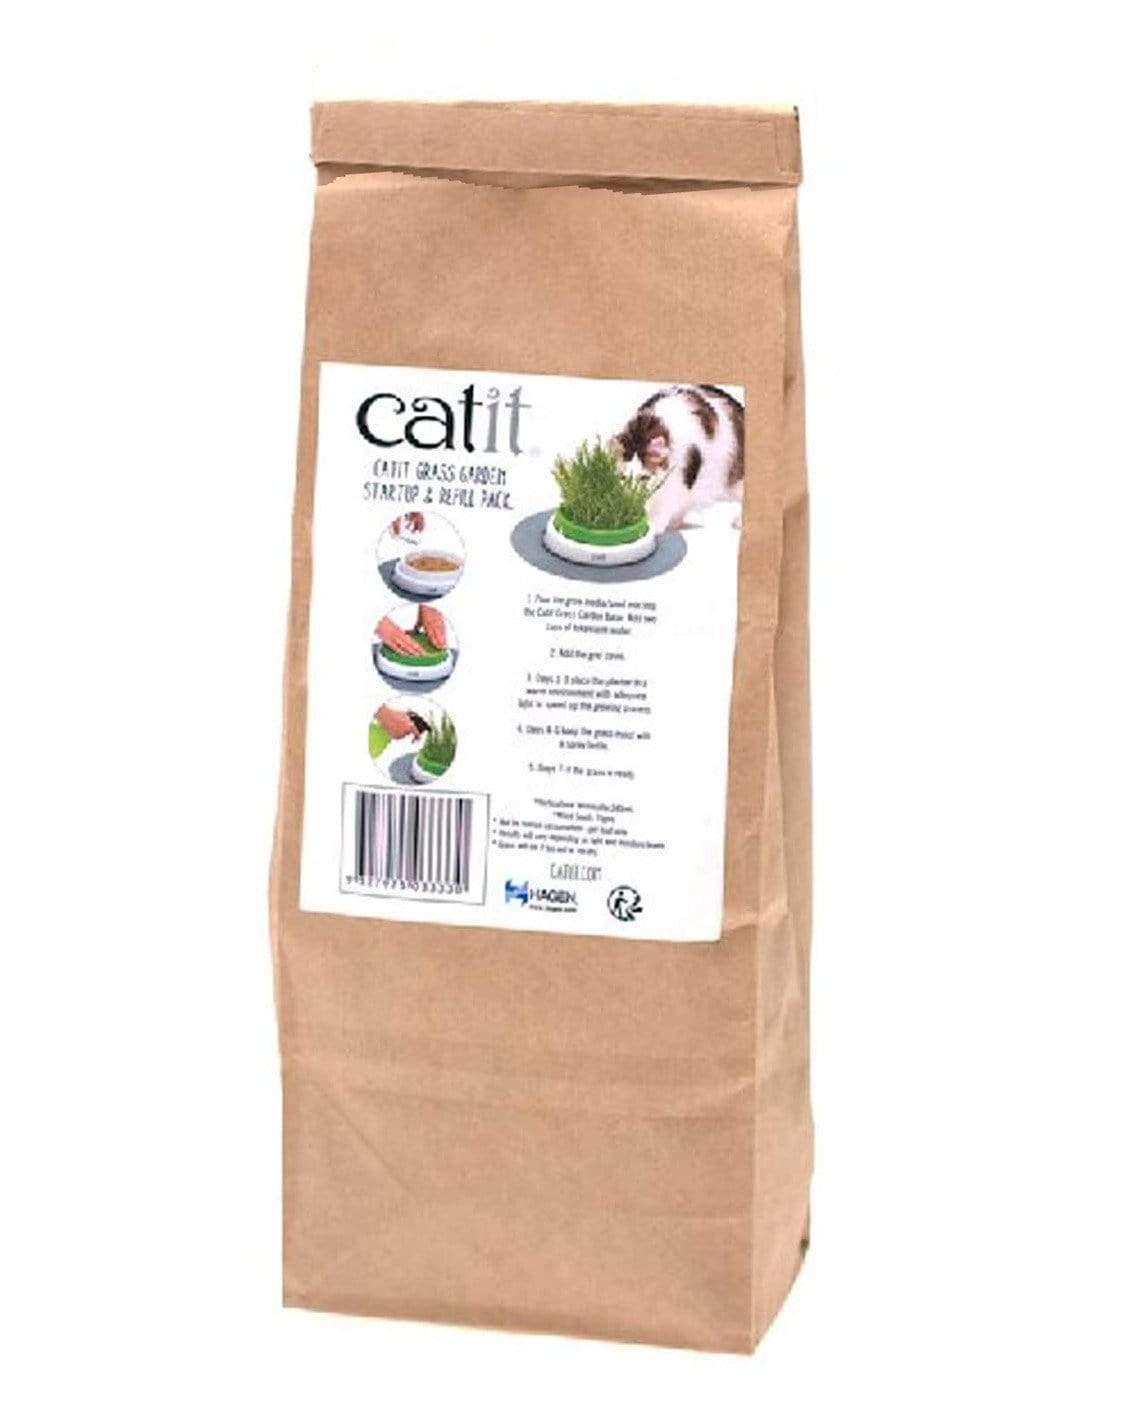 Catnets Catit Catit 2.0 – Grass Planter Refill